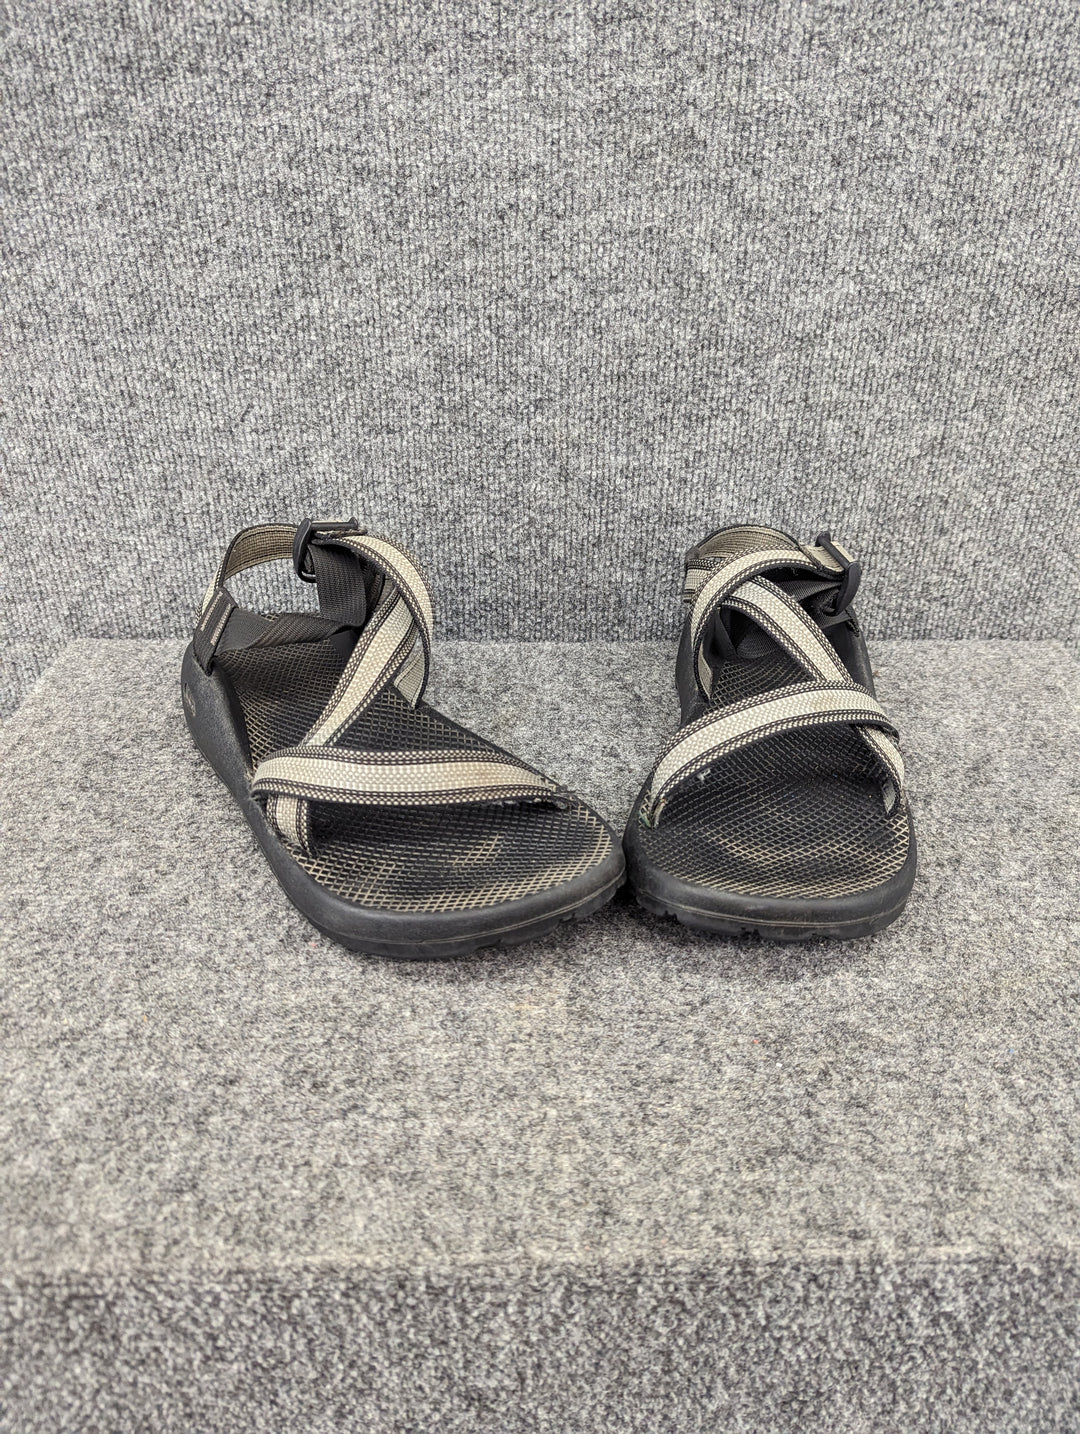 Chaco Size 13/47 Men's Sandals